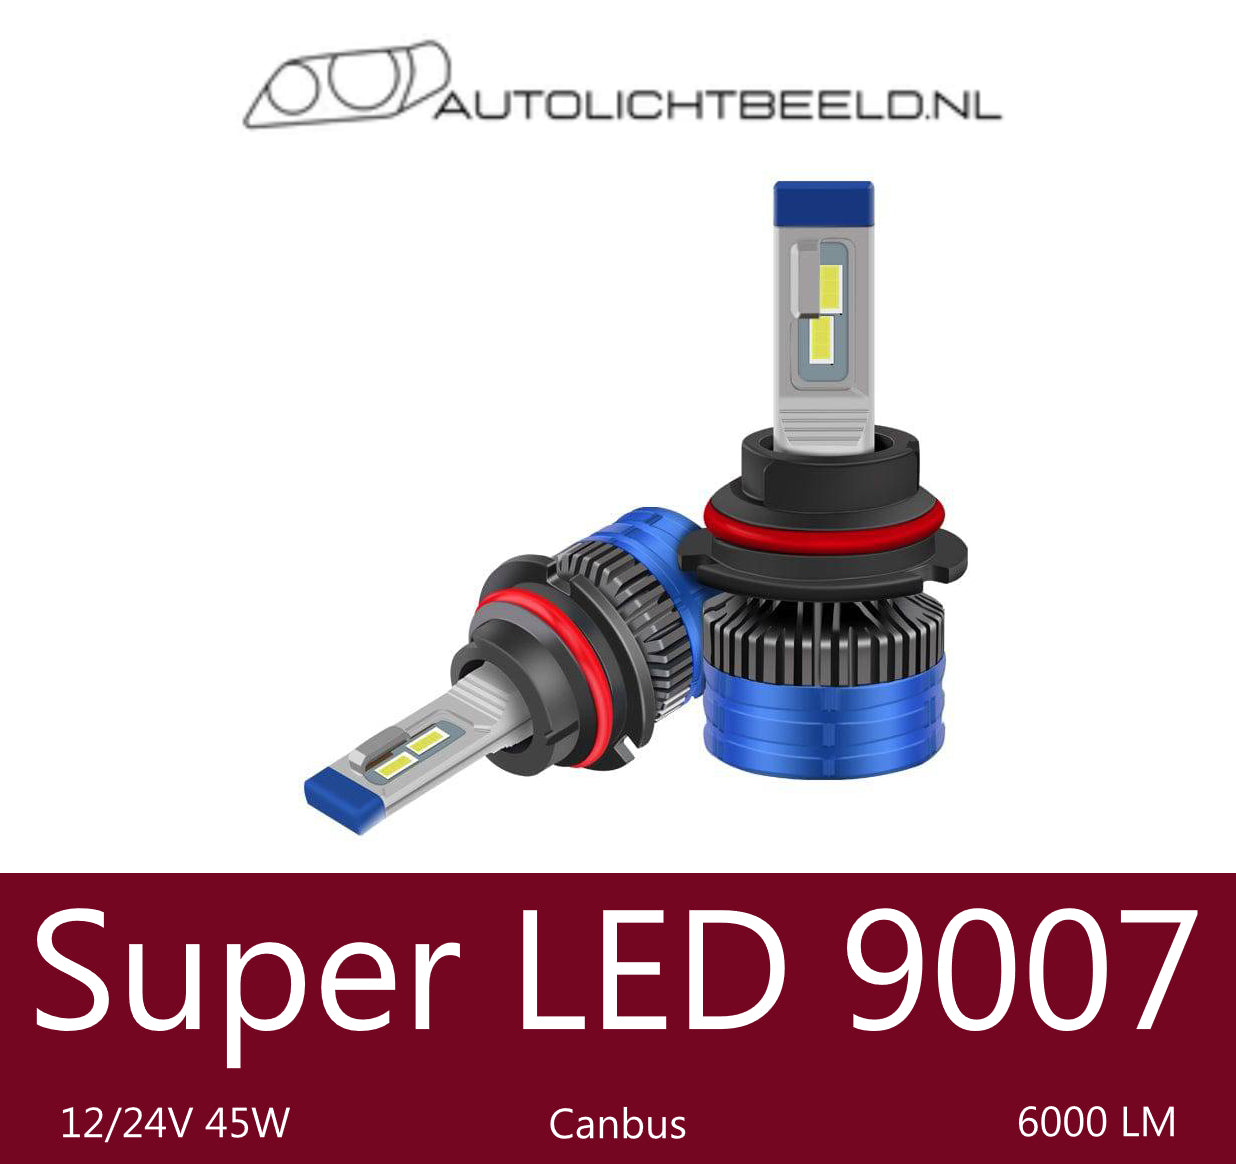 9007 Super LED - Autolichtbeeld